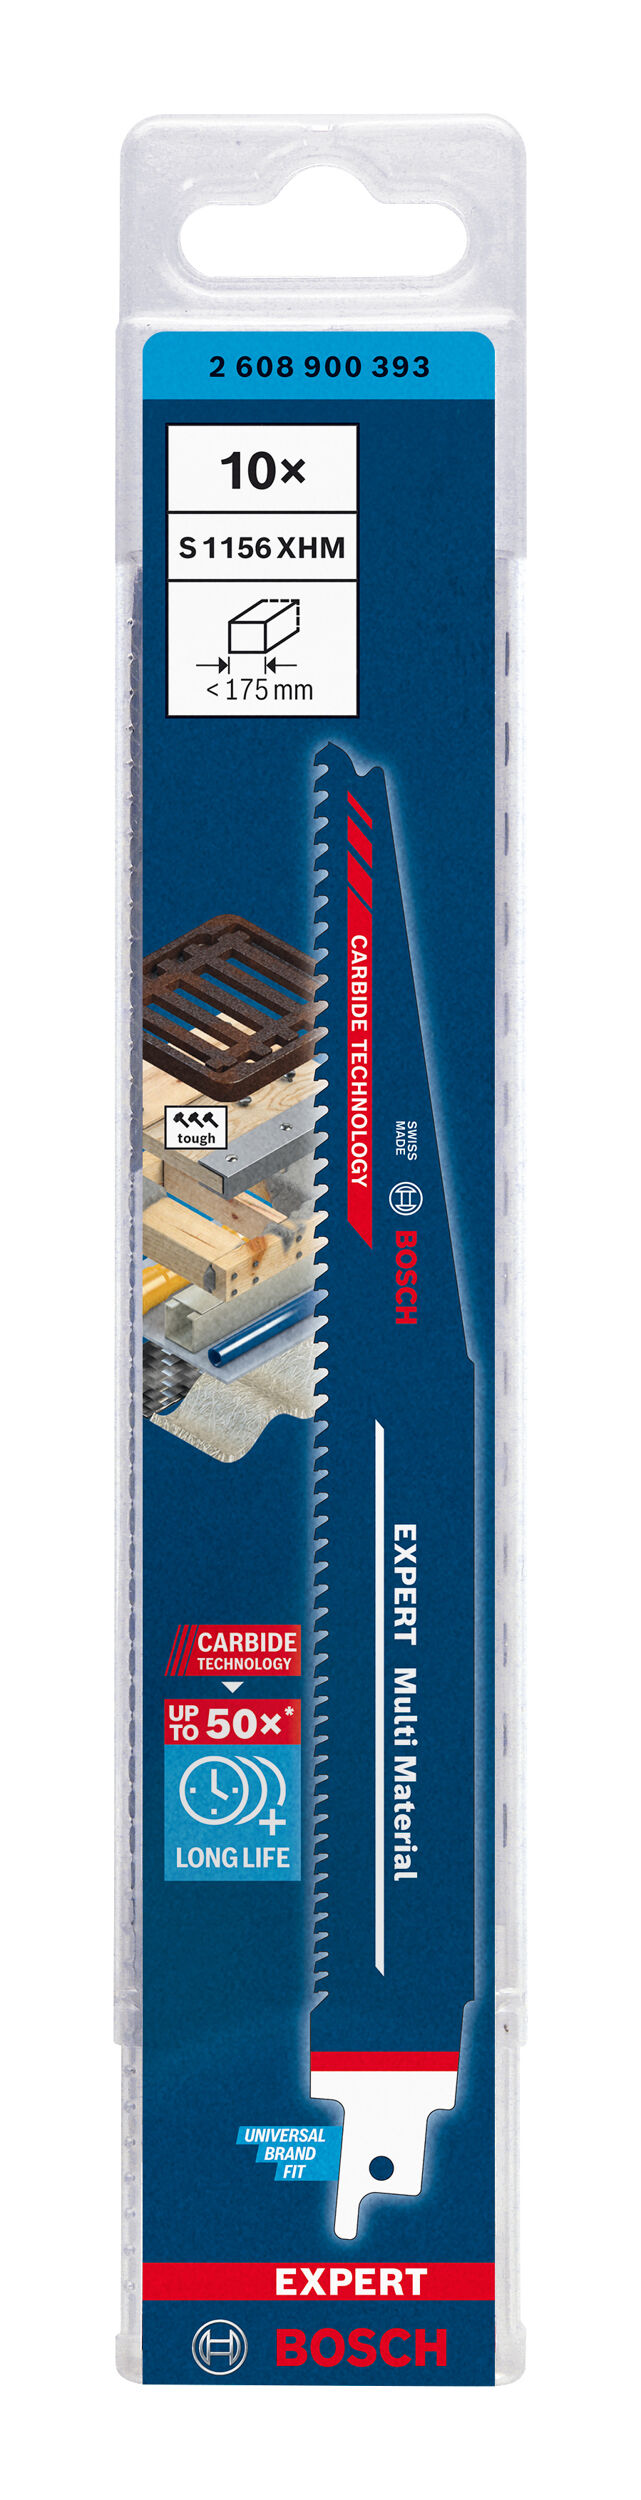 Säbelsägeblatt 1156 | S 10er-Pack XHM Metal Bosch Carbide 2608900393 for - Wood Progressor and Expert Zubehör